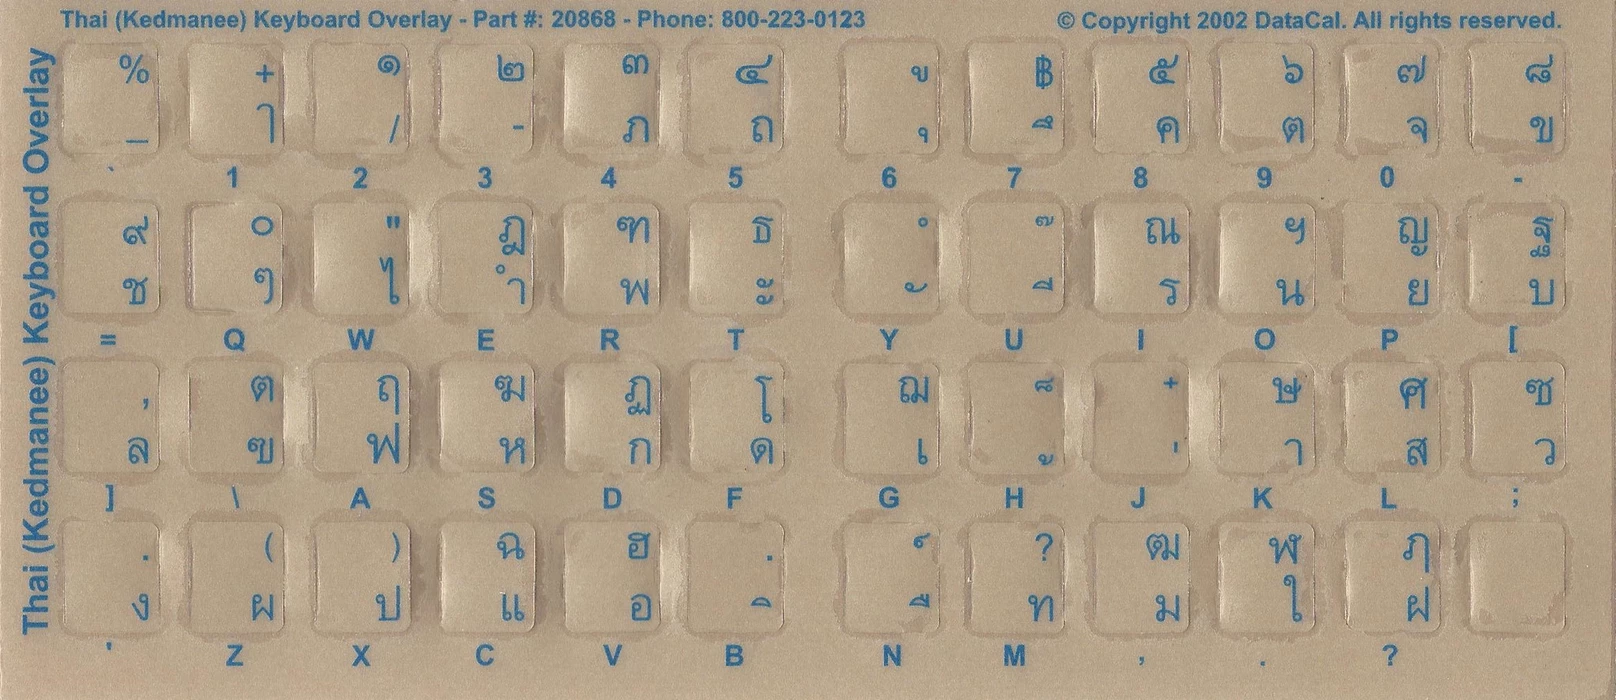 Thai Computer Keyboard Language Stickers - Labels - Overlays bilingual